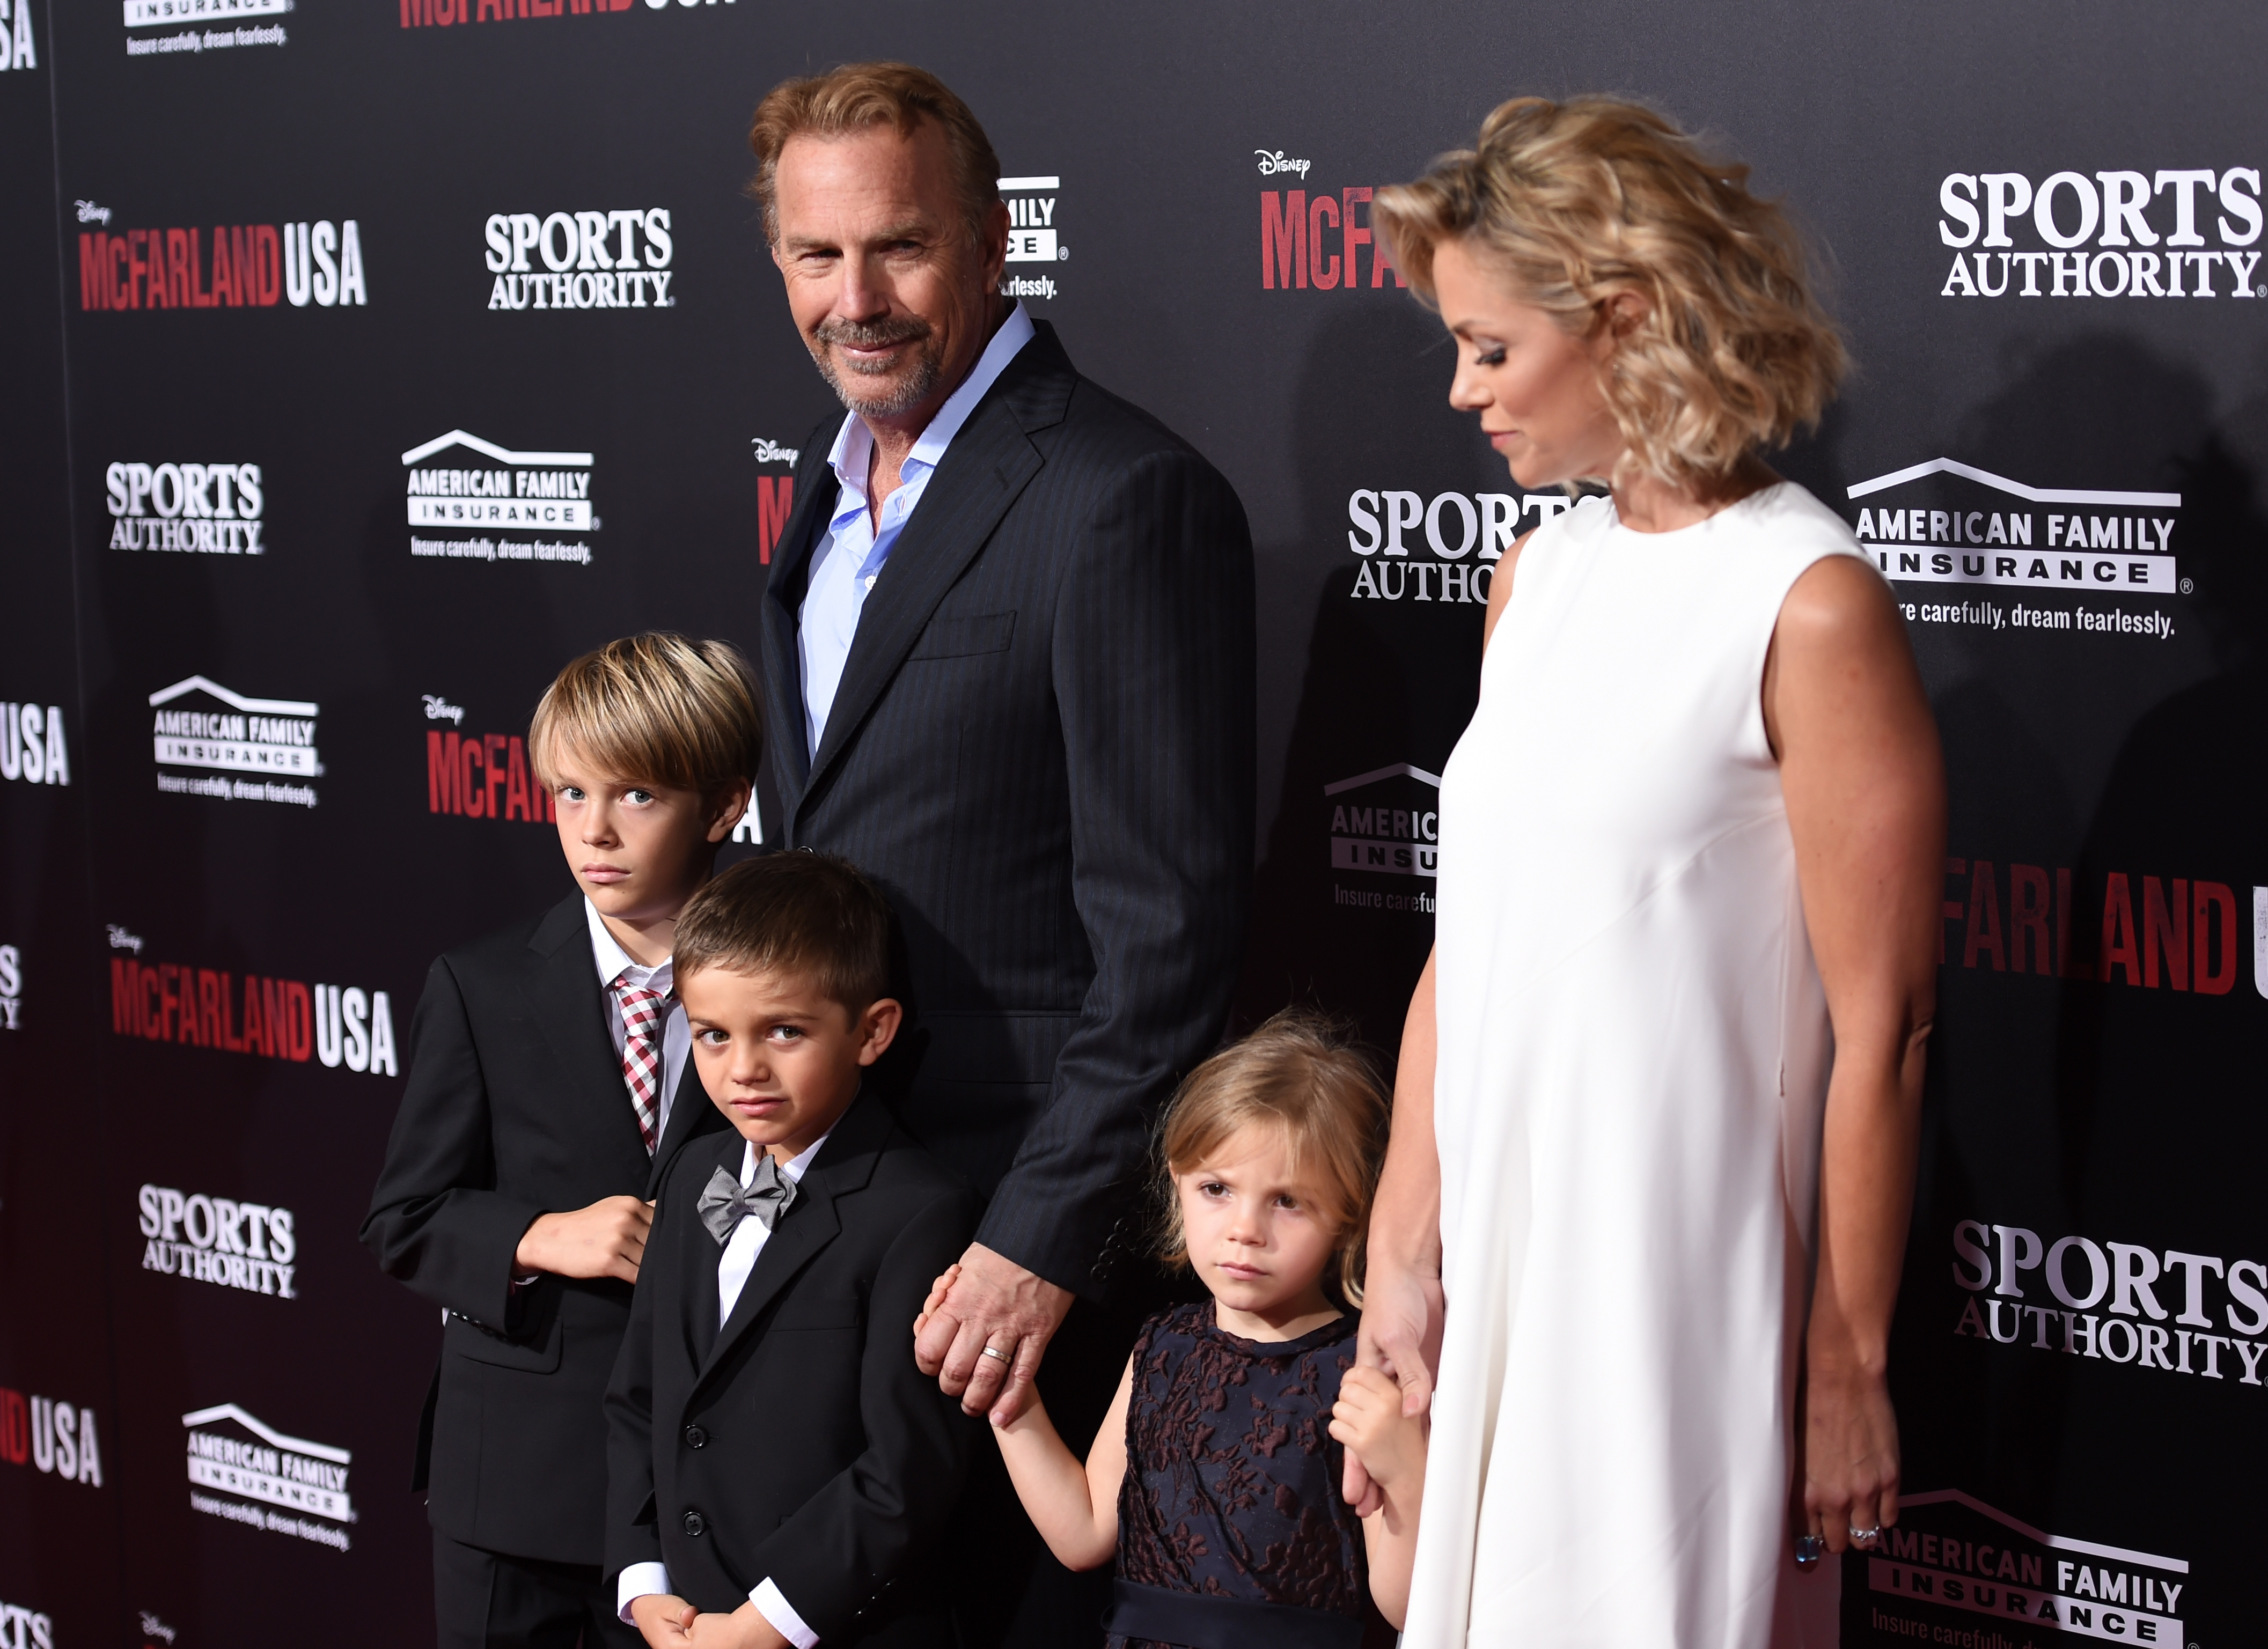 Kevin Costner, sa femme Christine Baumgartner, et leurs enfants à la première mondiale de "McFarland, USA" ; le 9 février 2015, à Hollywood, en Californie | Source : Getty Images